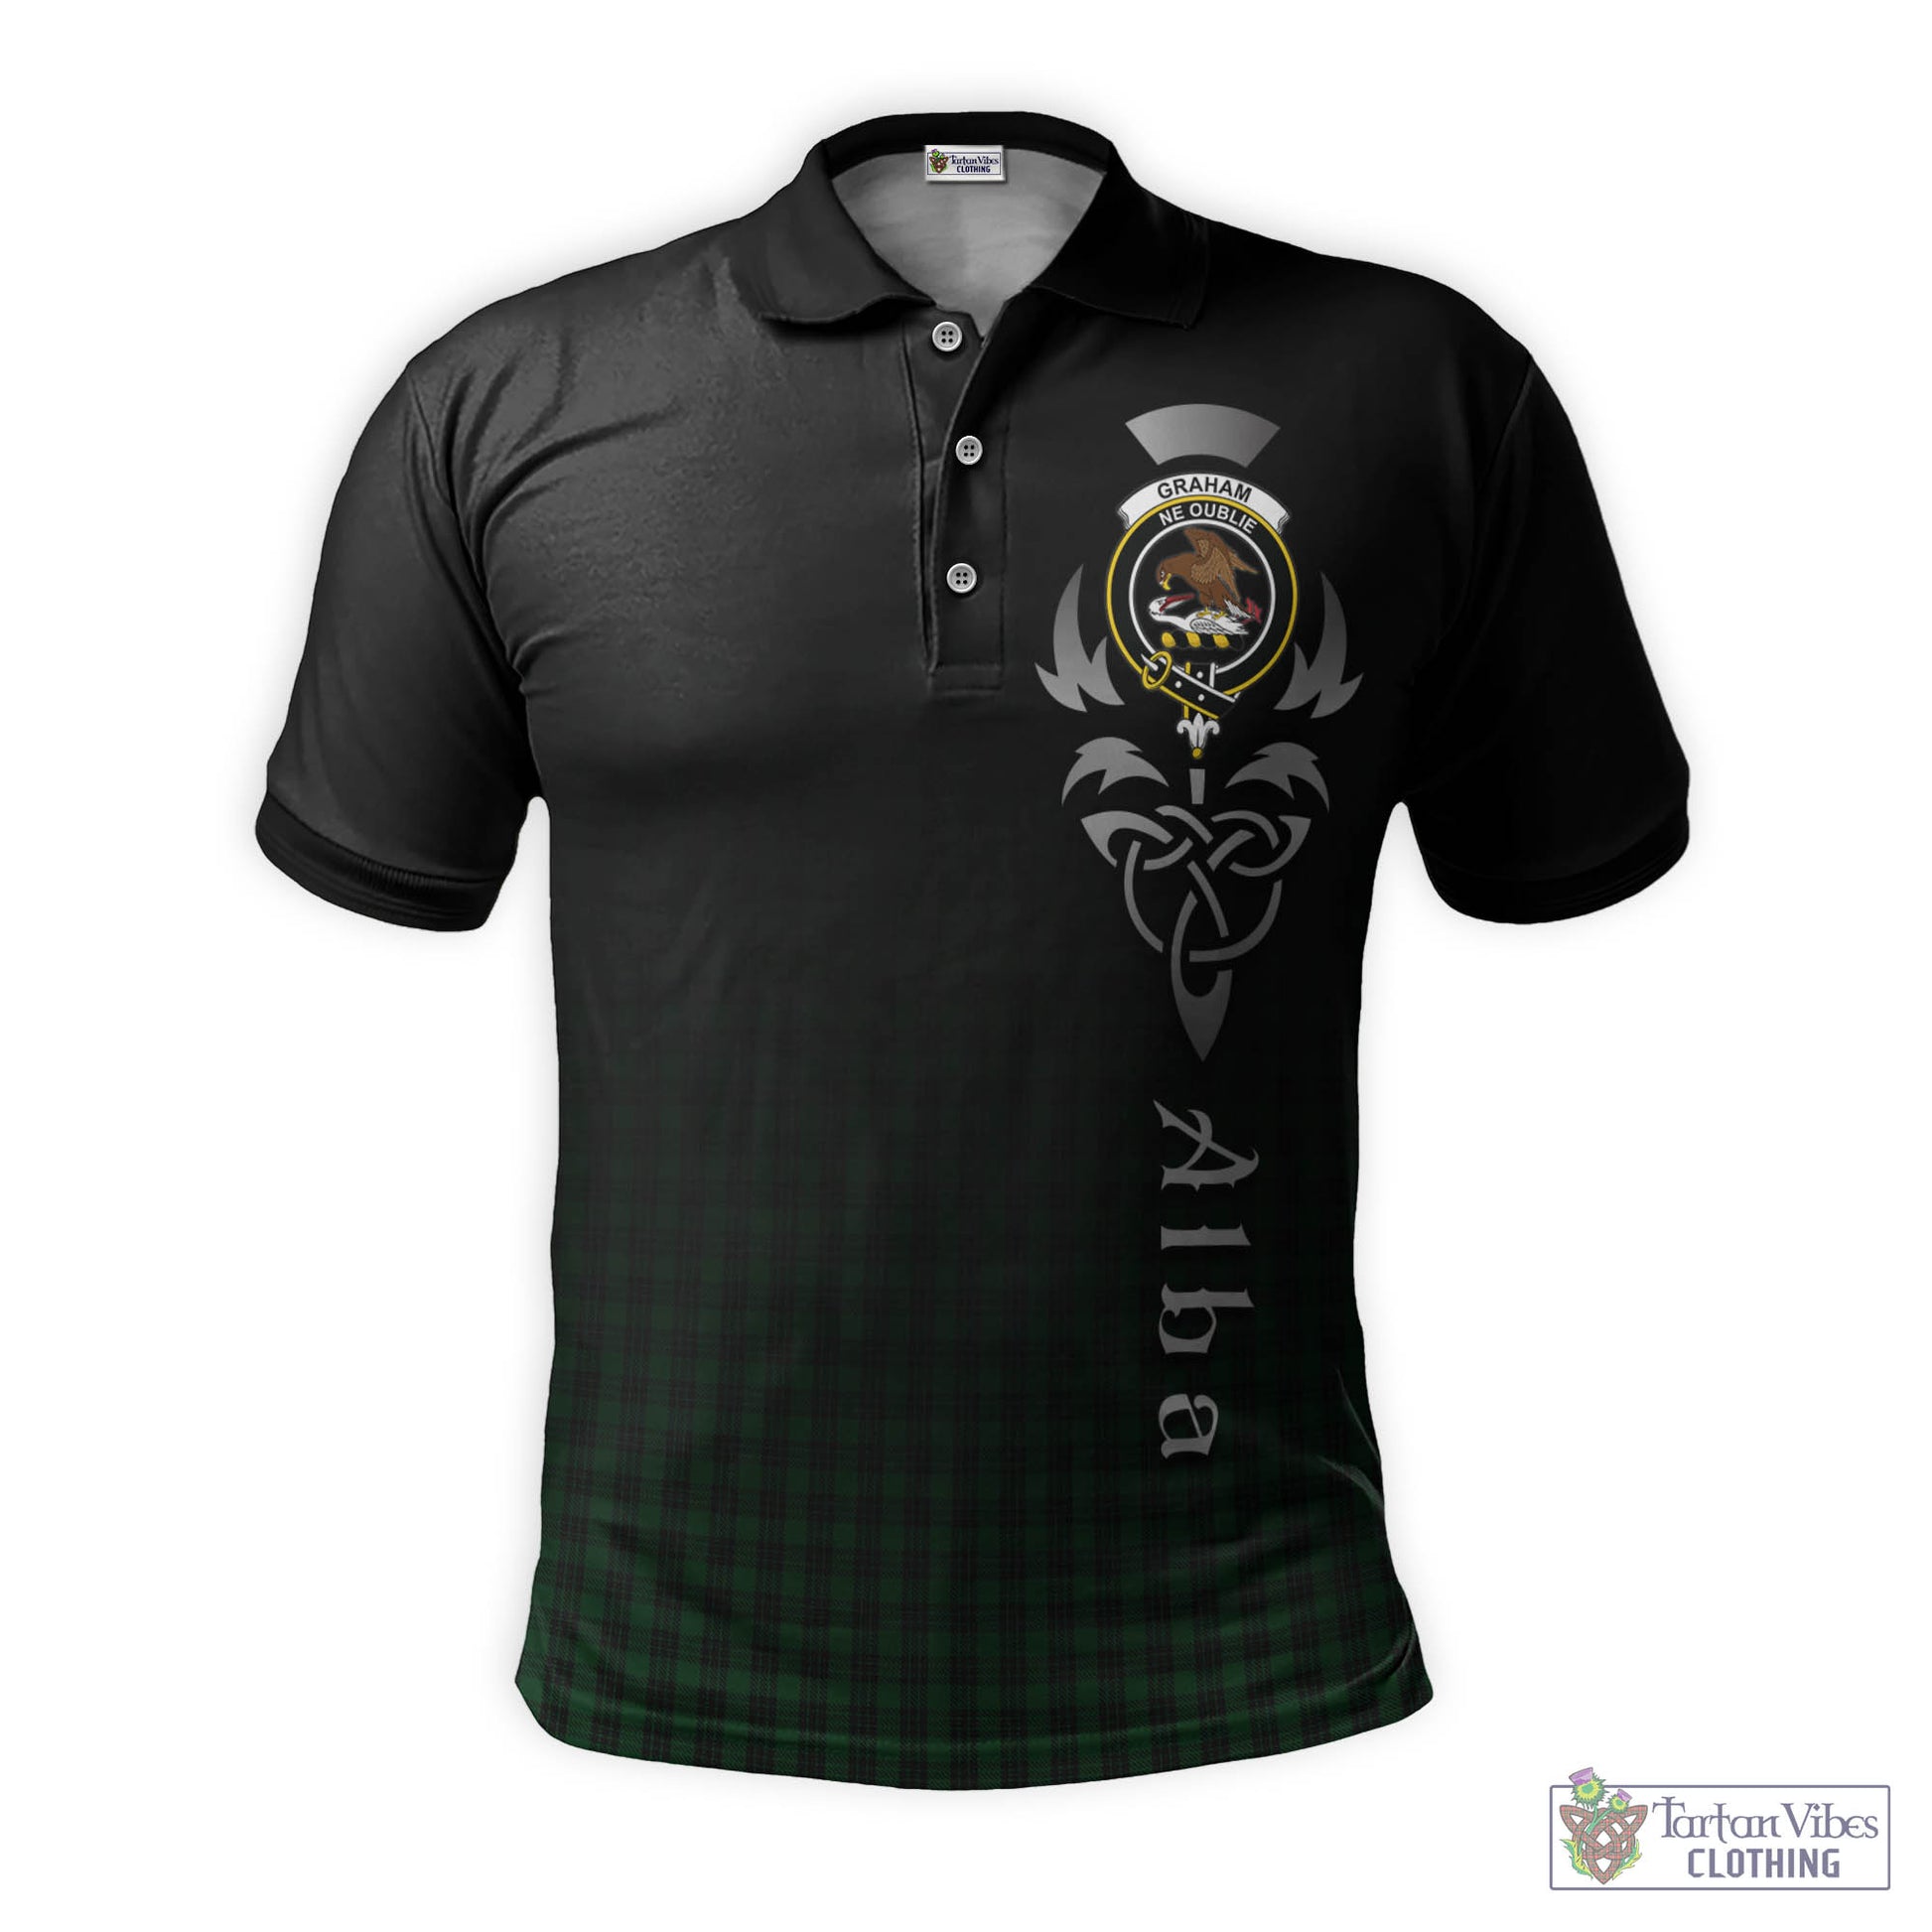 Tartan Vibes Clothing Graham Tartan Polo Shirt Featuring Alba Gu Brath Family Crest Celtic Inspired